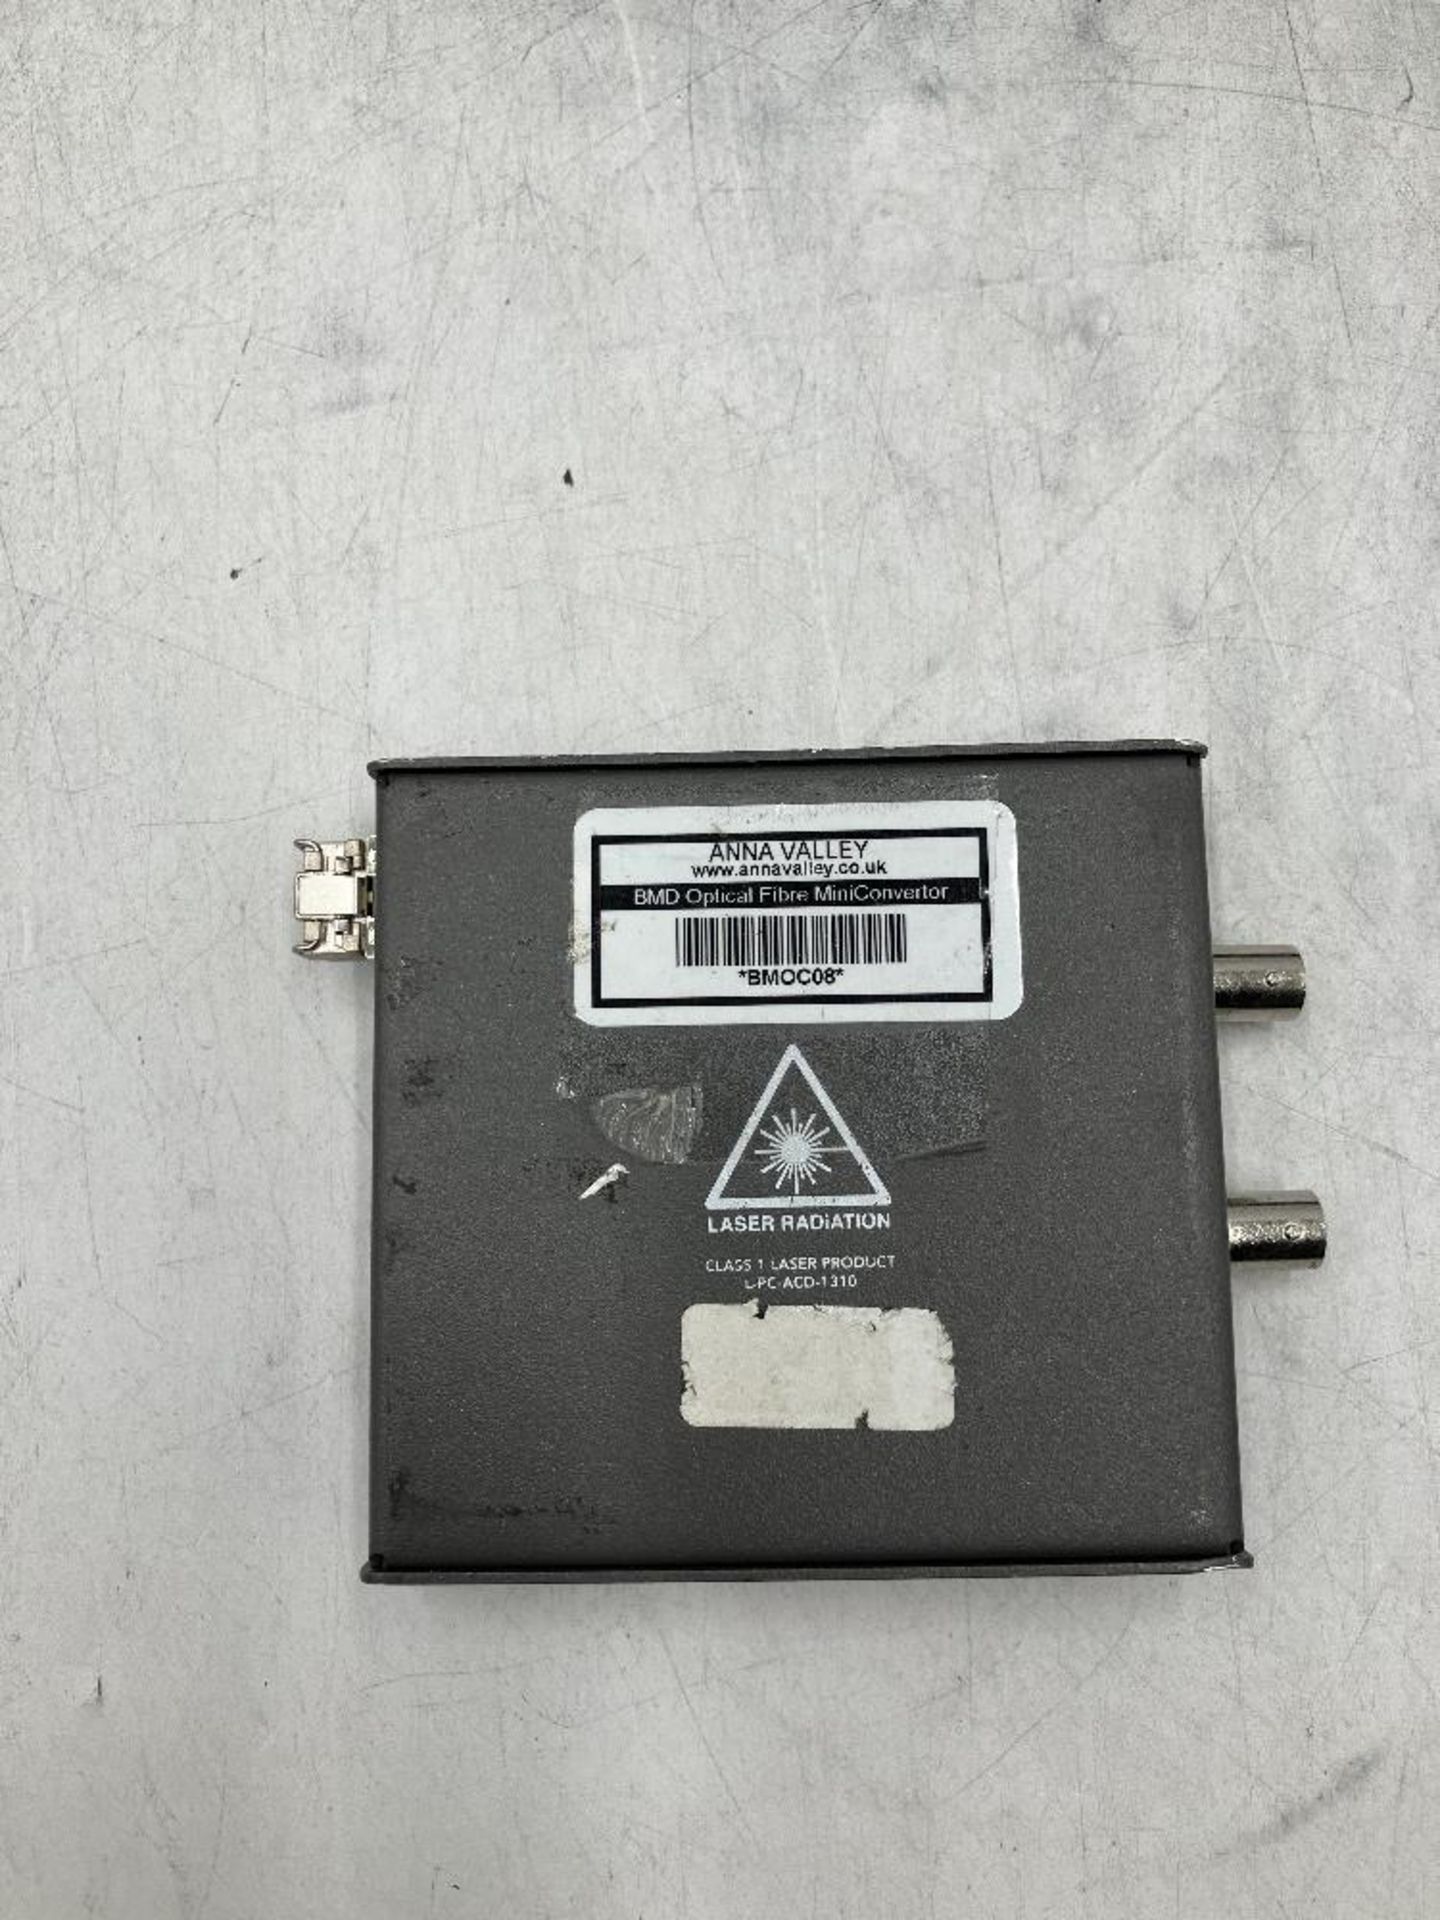 Blackmagic Mini Optical Fibre to SDI Bidirectional Converter With Power Cable & Plastic Carry Case - Image 3 of 5